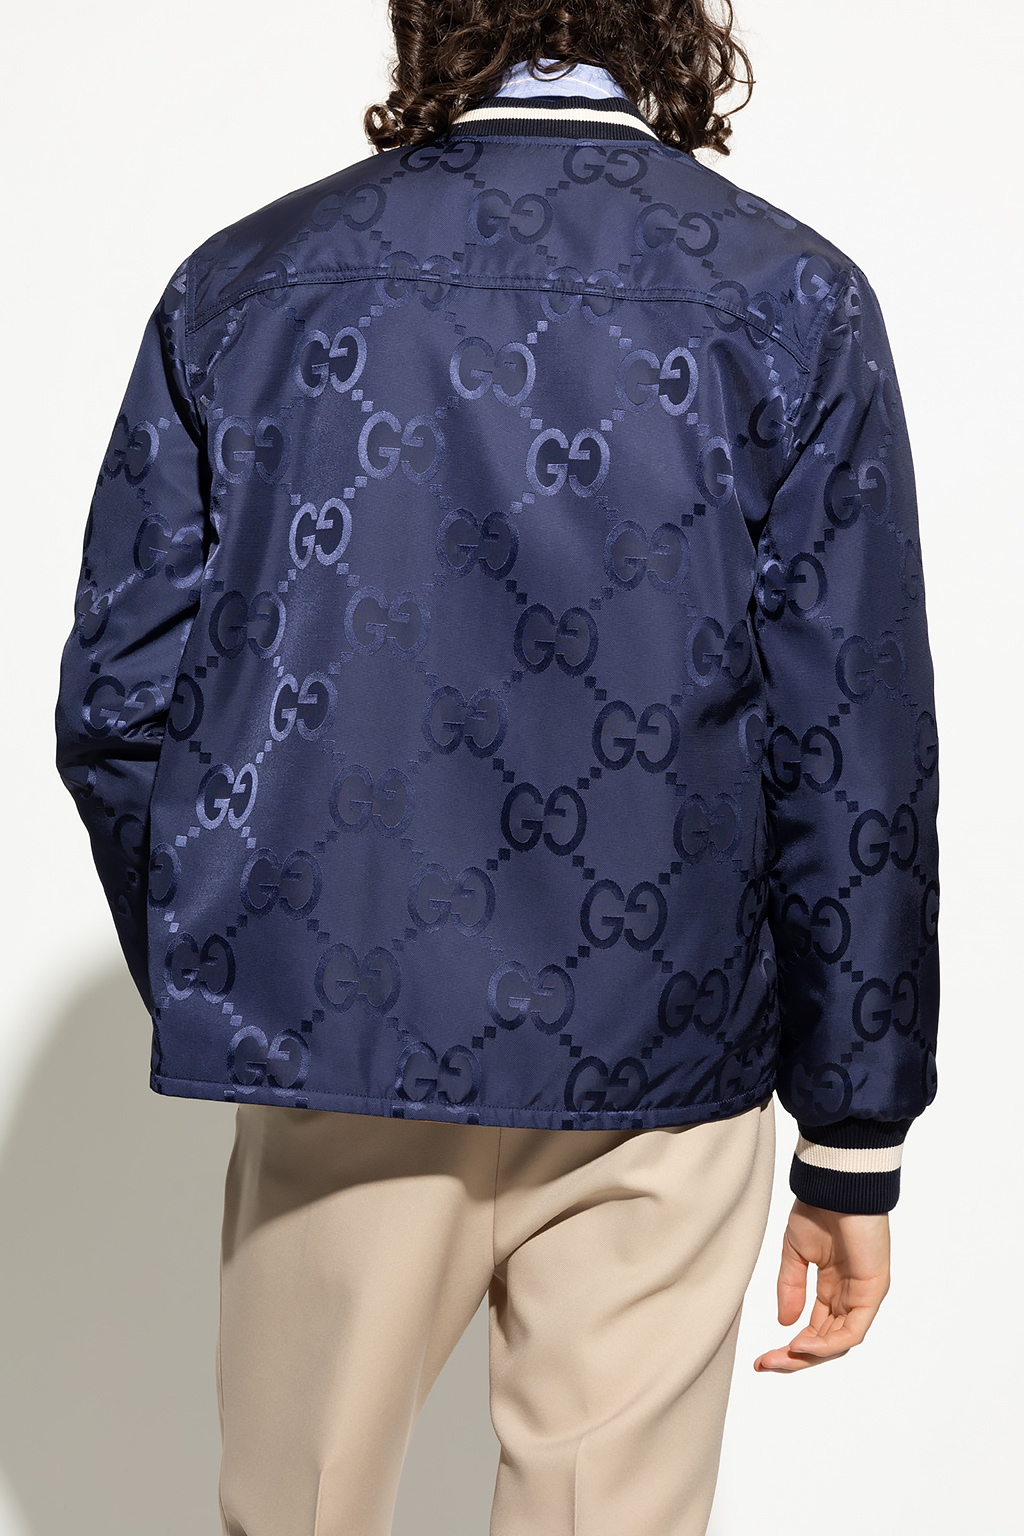 GG Reversible Jacket in Beige - Gucci